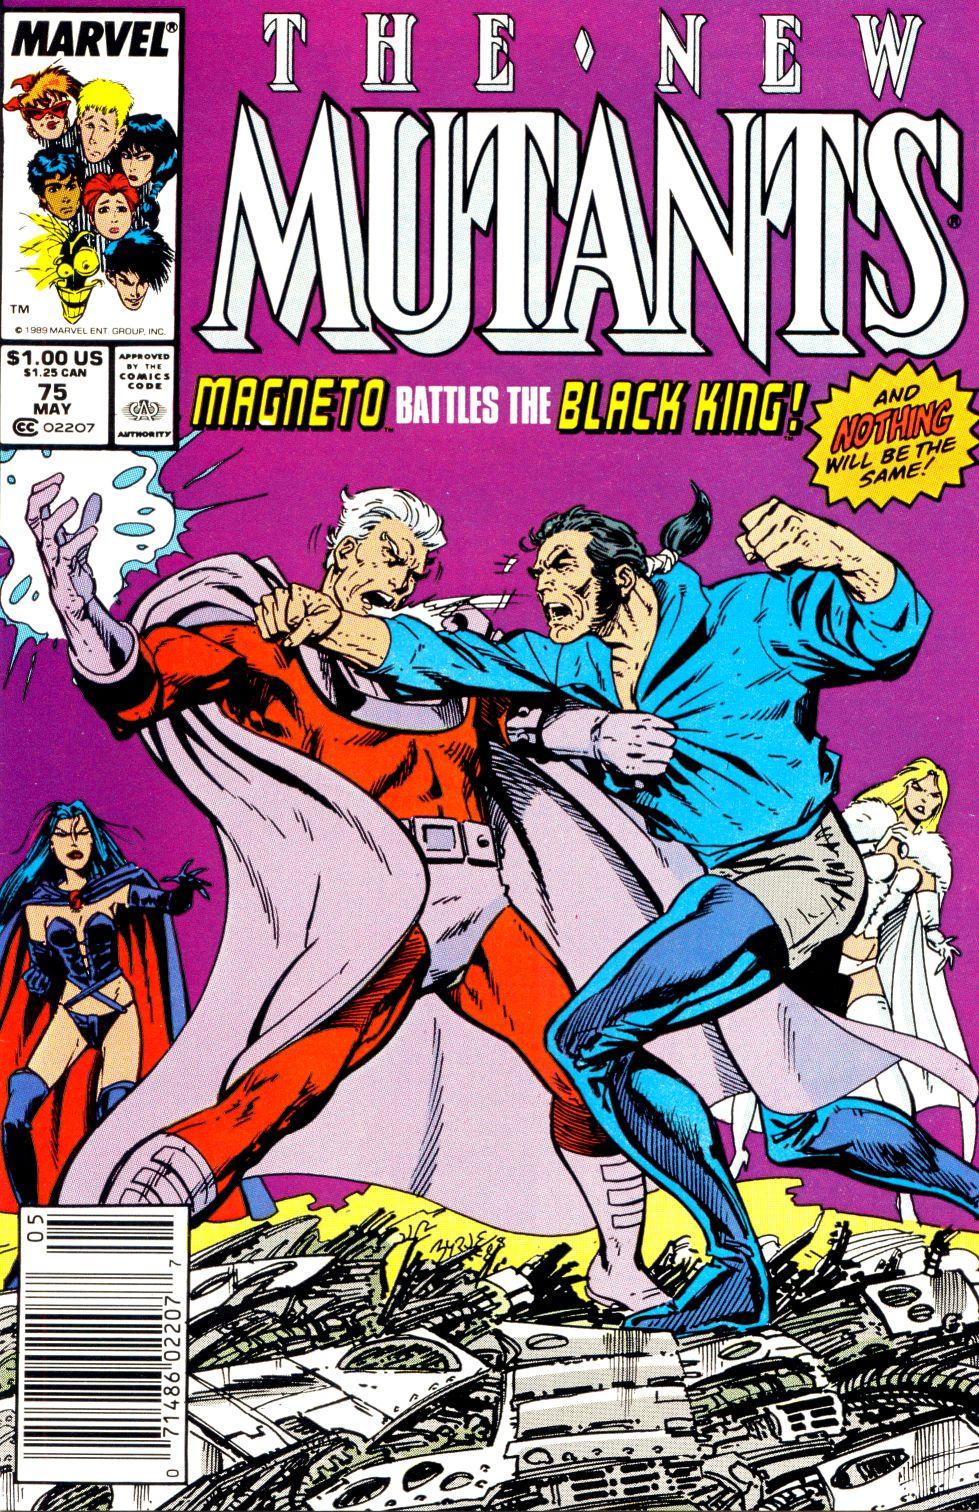 The New Mutants Vol. 1 #75